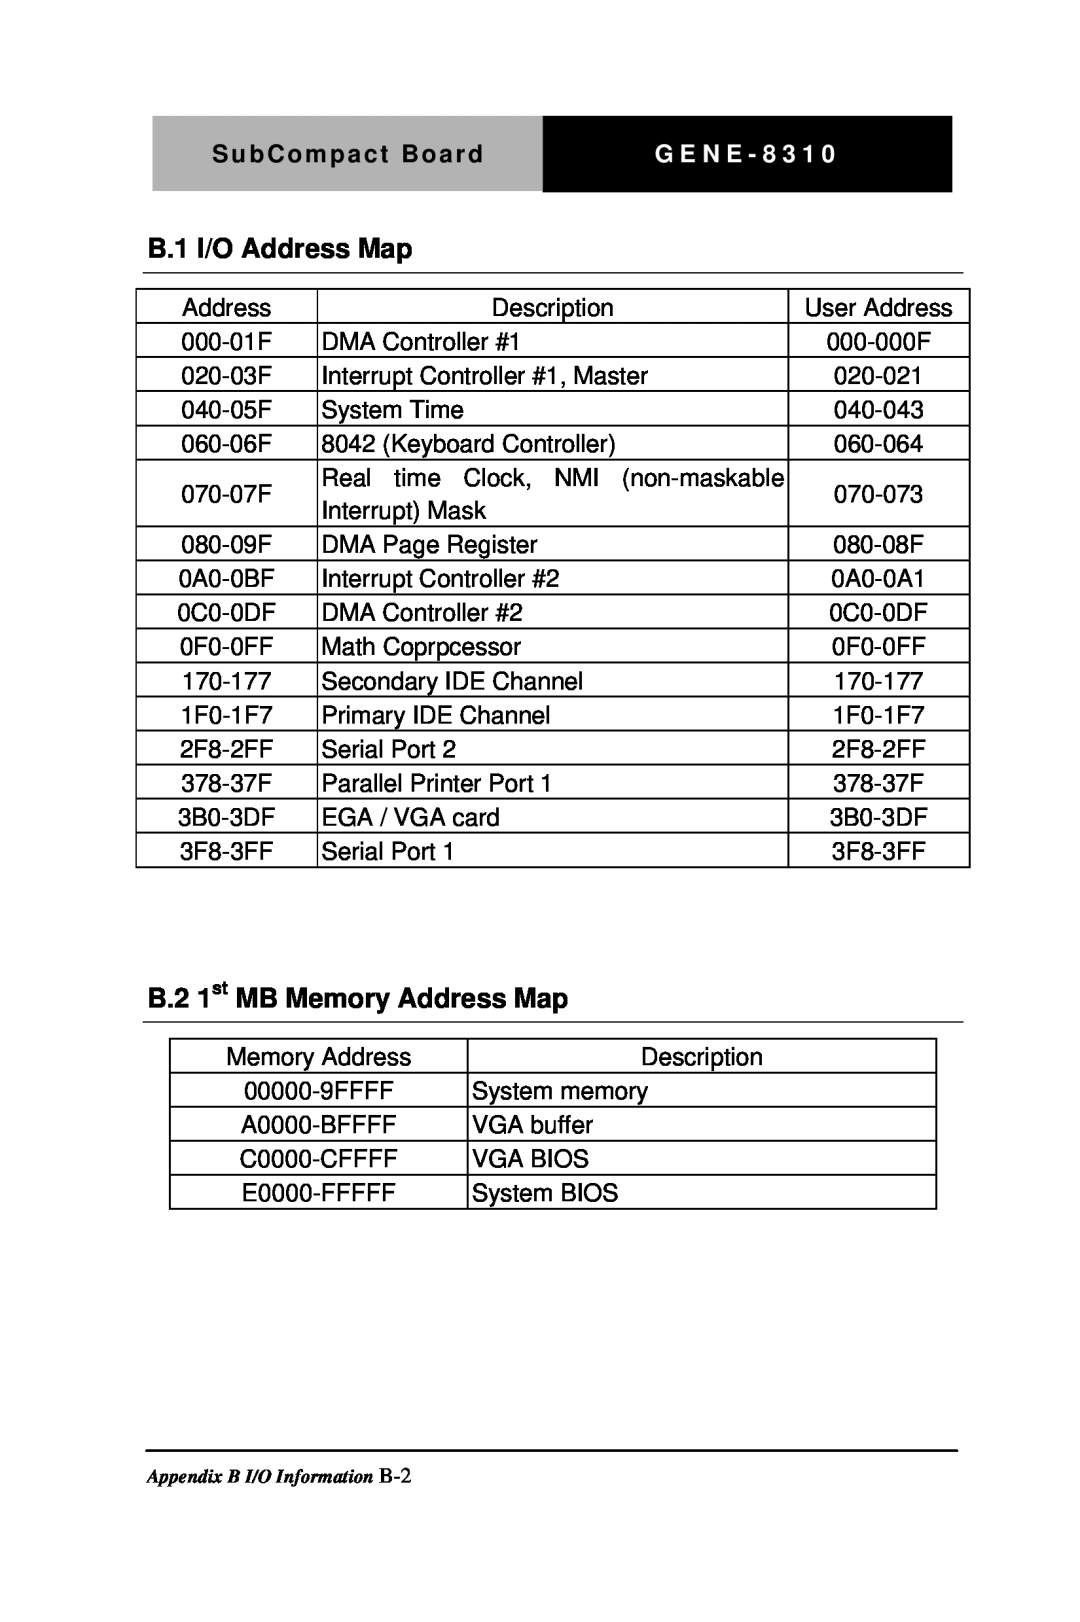 Intel GENE-8310 manual B.1 I/O Address Map, B.2 1st MB Memory Address Map, SubCompact BoardG E N E - 8 3 1 